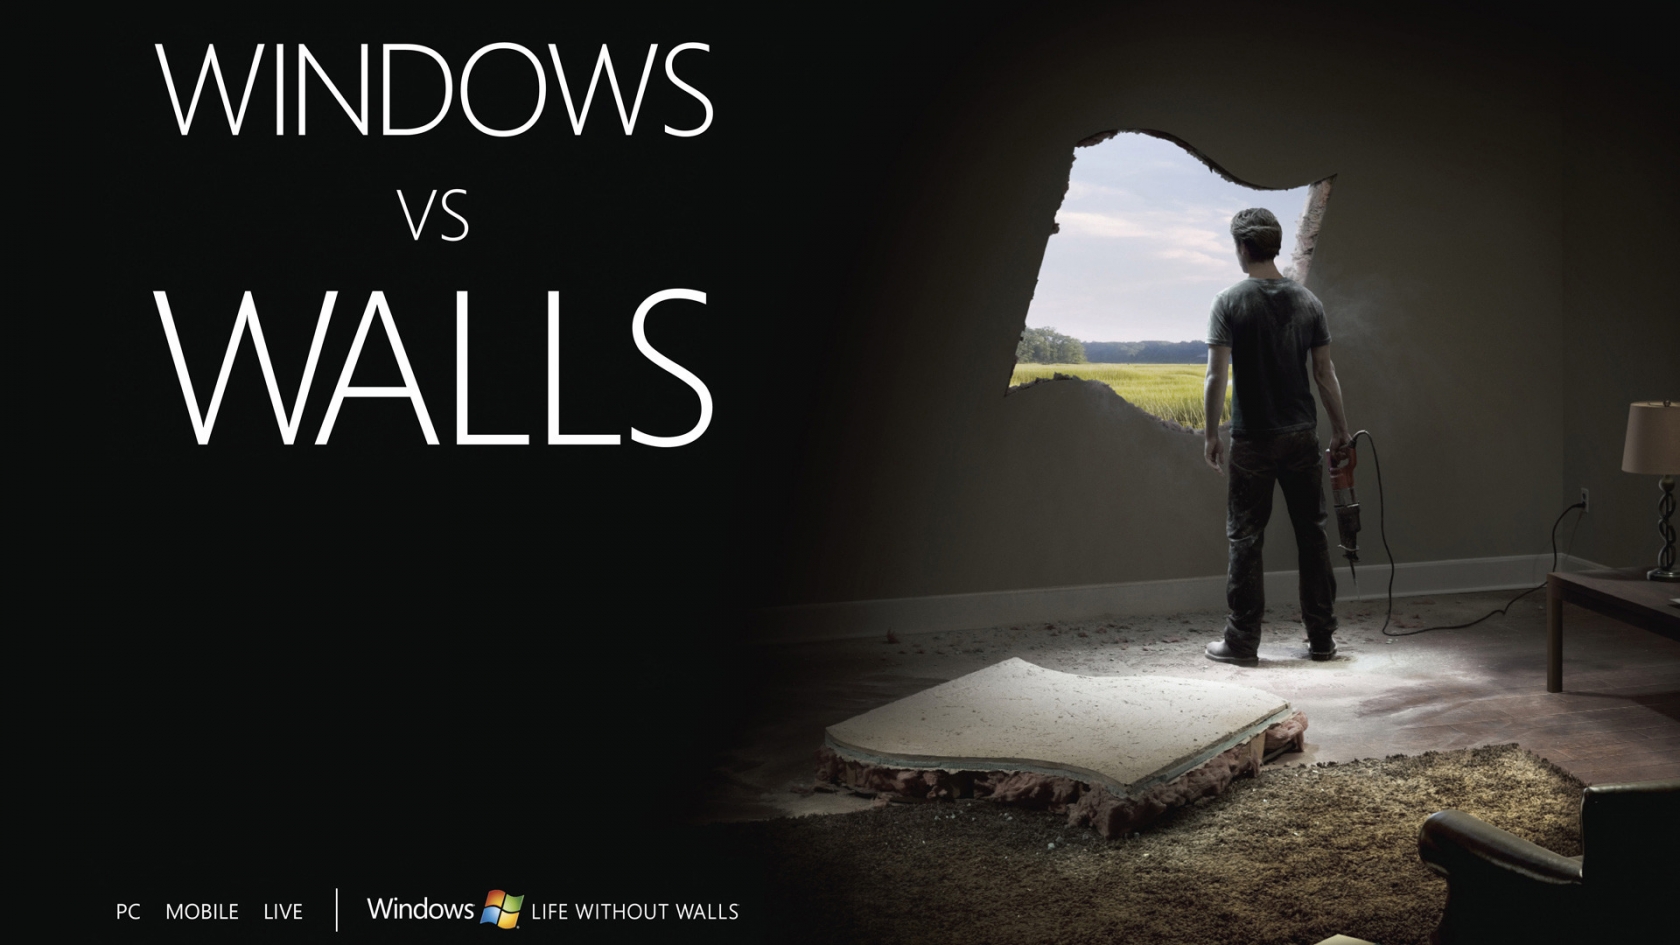 Windows vs Walls for 1680 x 945 HDTV resolution